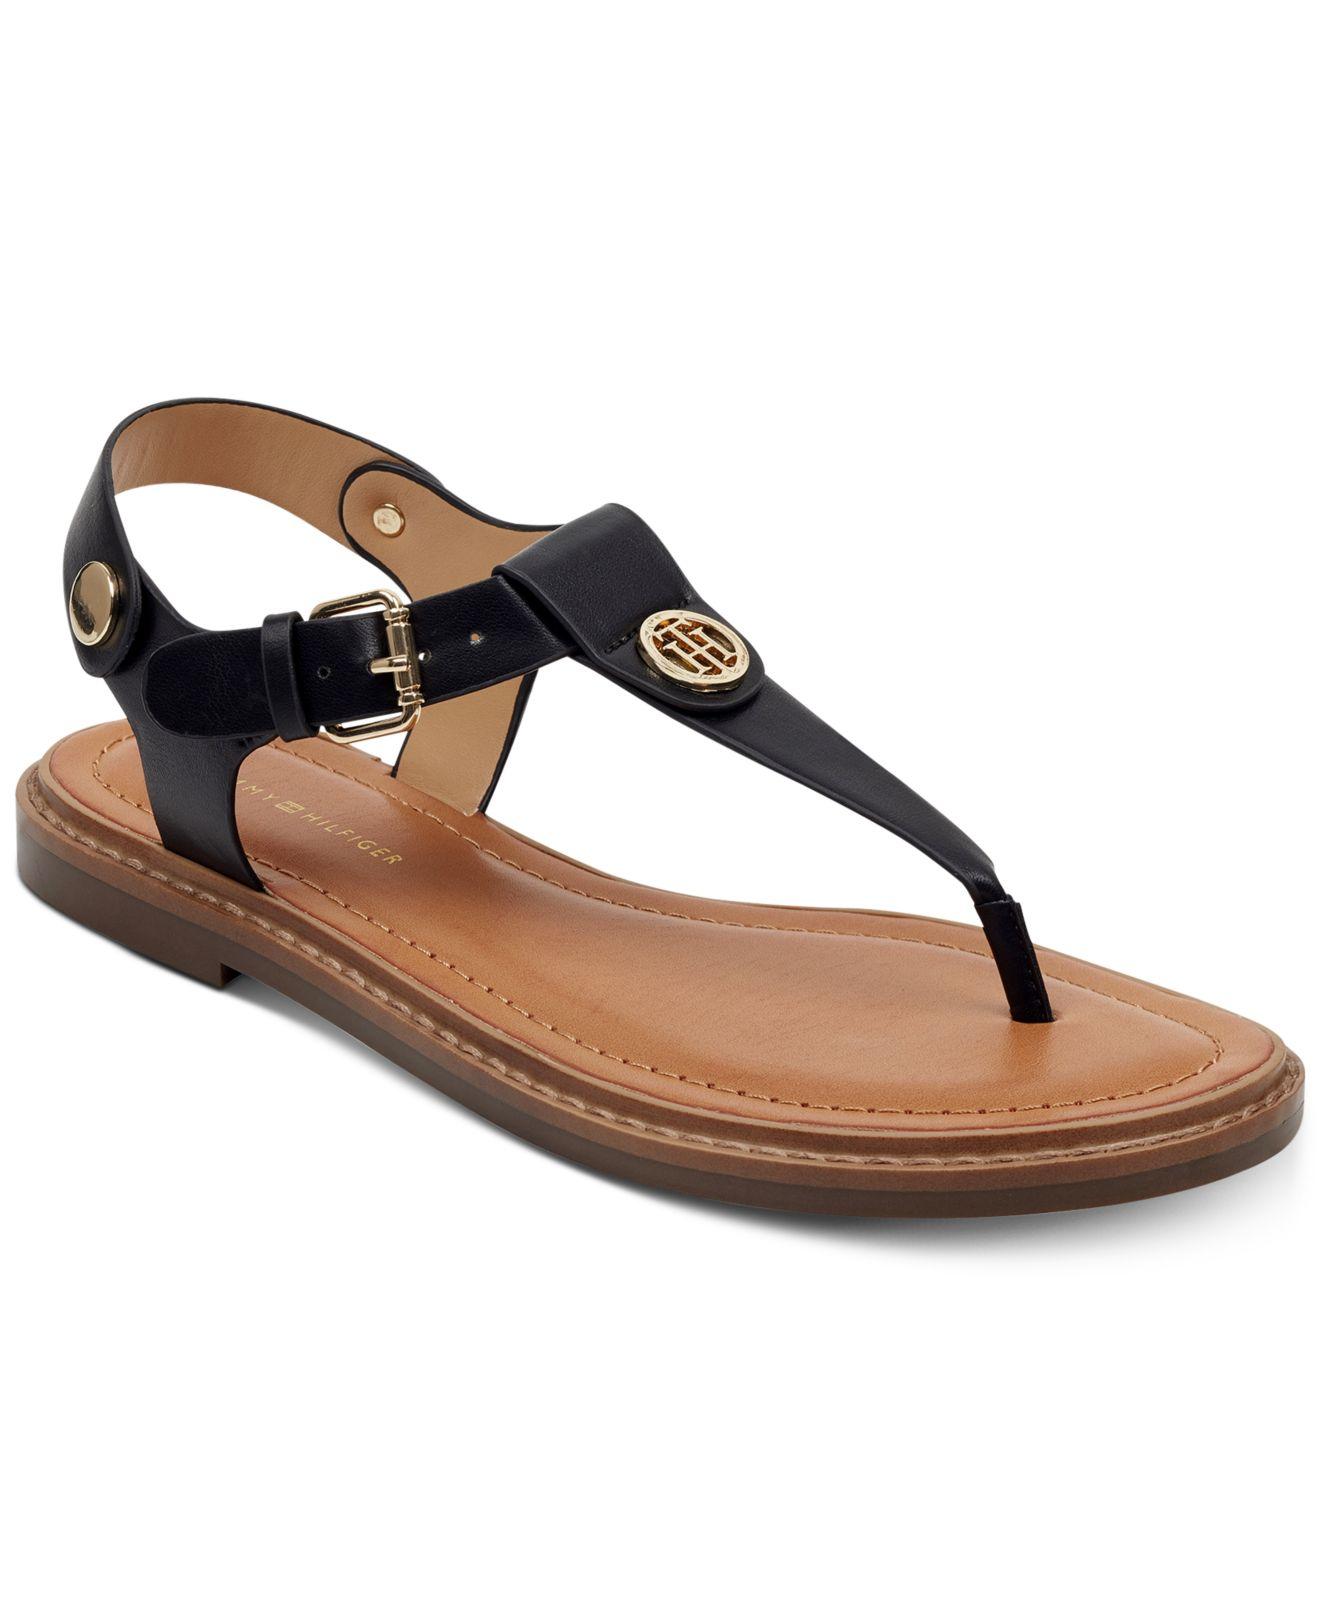 Tommy Hilfiger Bennia T-strap Flat Sandals in Black - Lyst